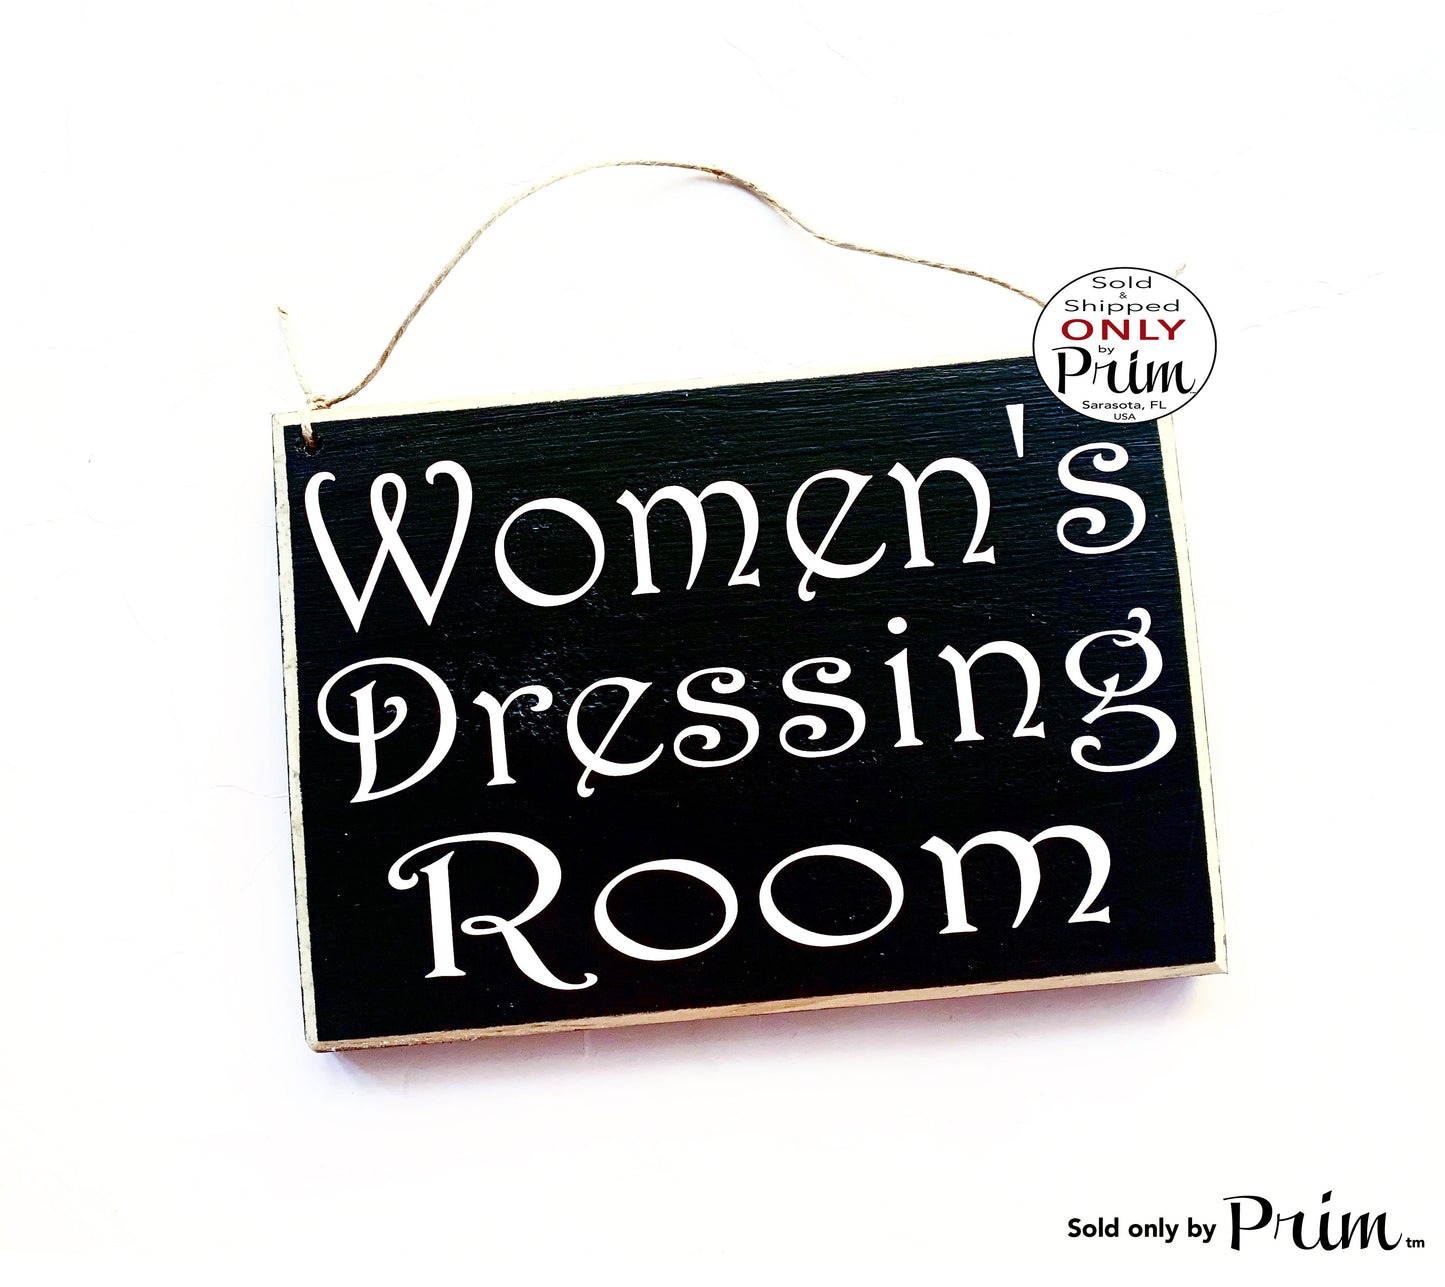 8x6 Men's Women's Dressing Room Custom Wood Sign | Boutique Shop Changing Room Salon Shop Retail Clothing Store Spa Wall Door Plaque